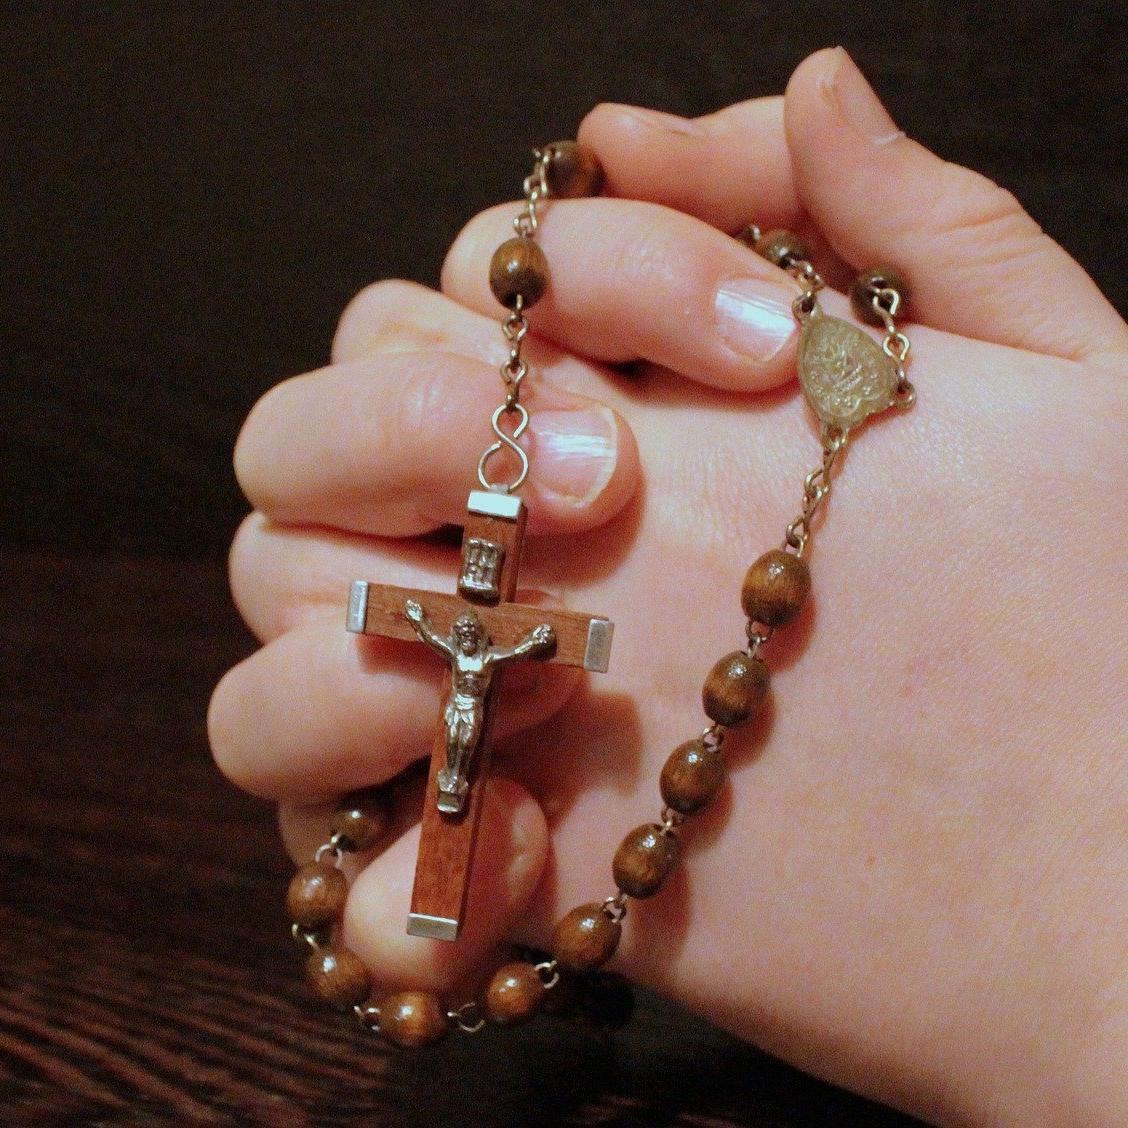 rosary-gbea616f76_1920